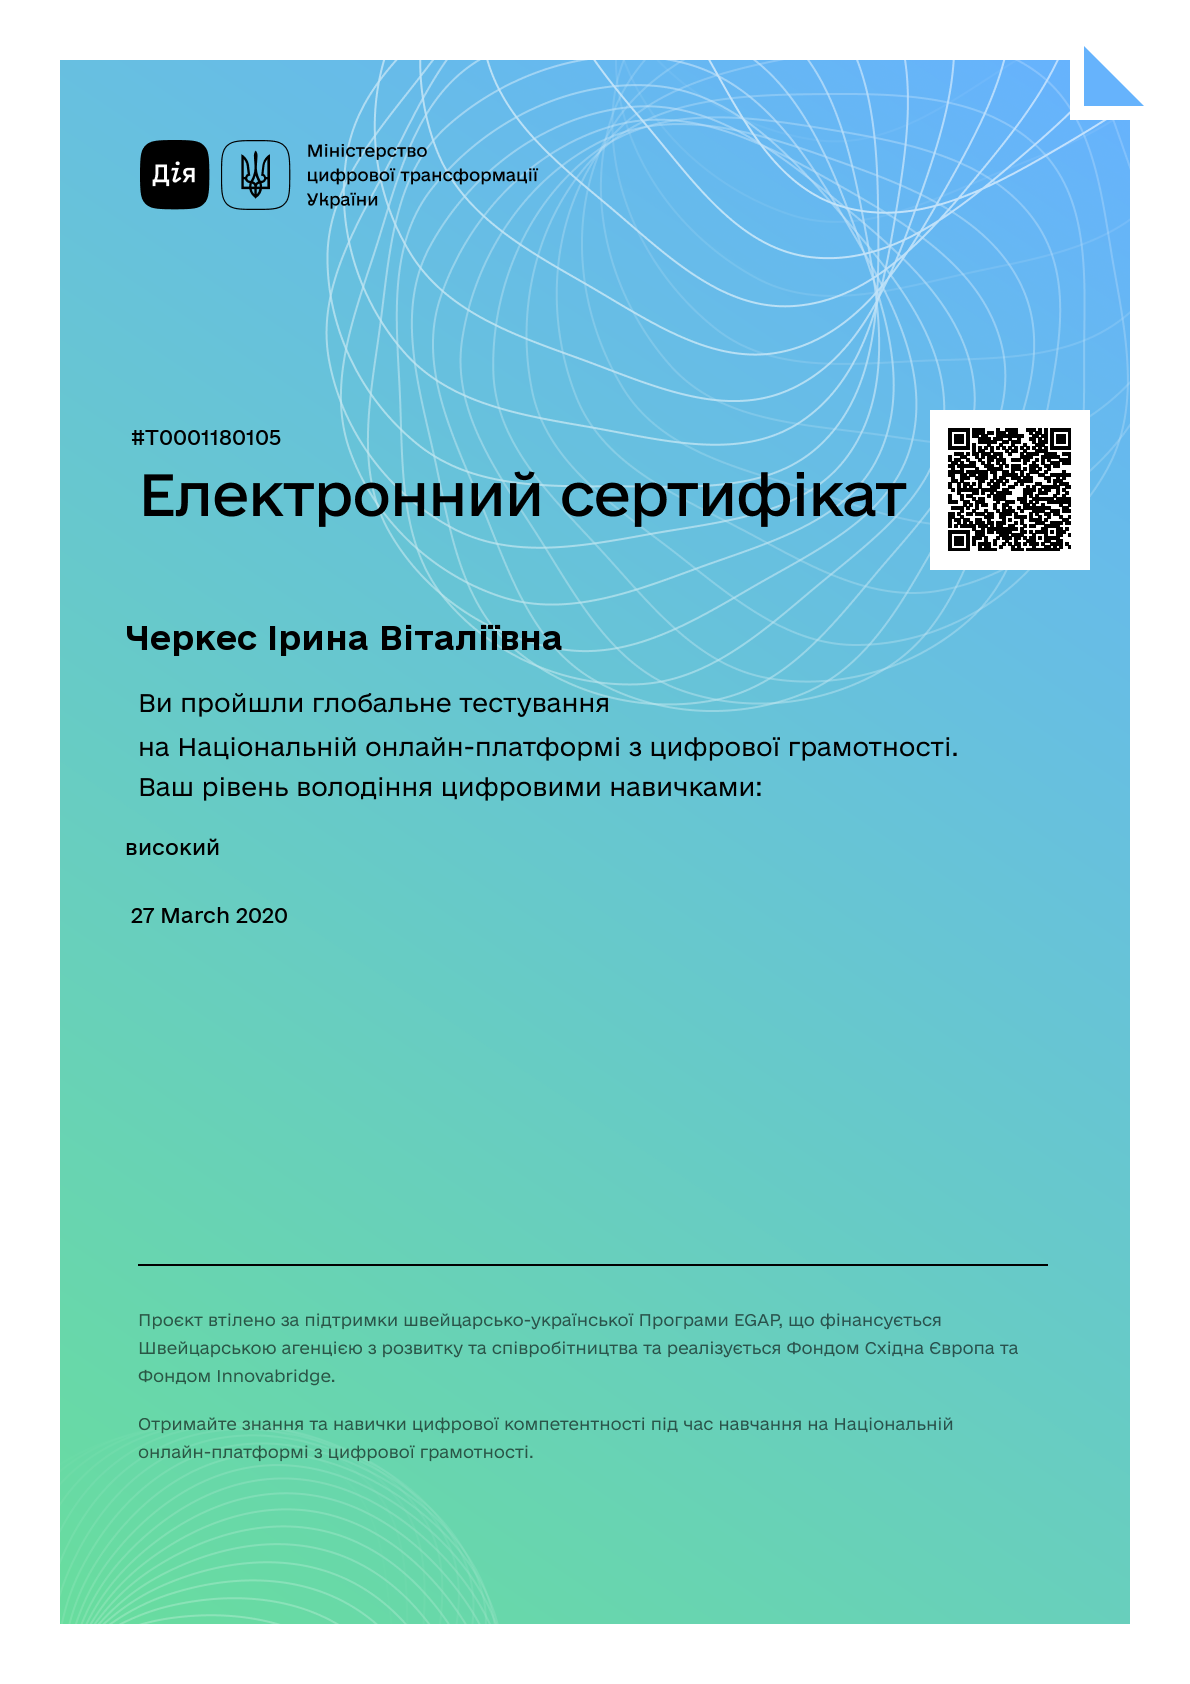 /uploads/certificate/20200327/NLl-4nuiKOzhUv3xSqNkuyGzOq_JlP8W-1585314119.png?v=1715203978?v=1715203978